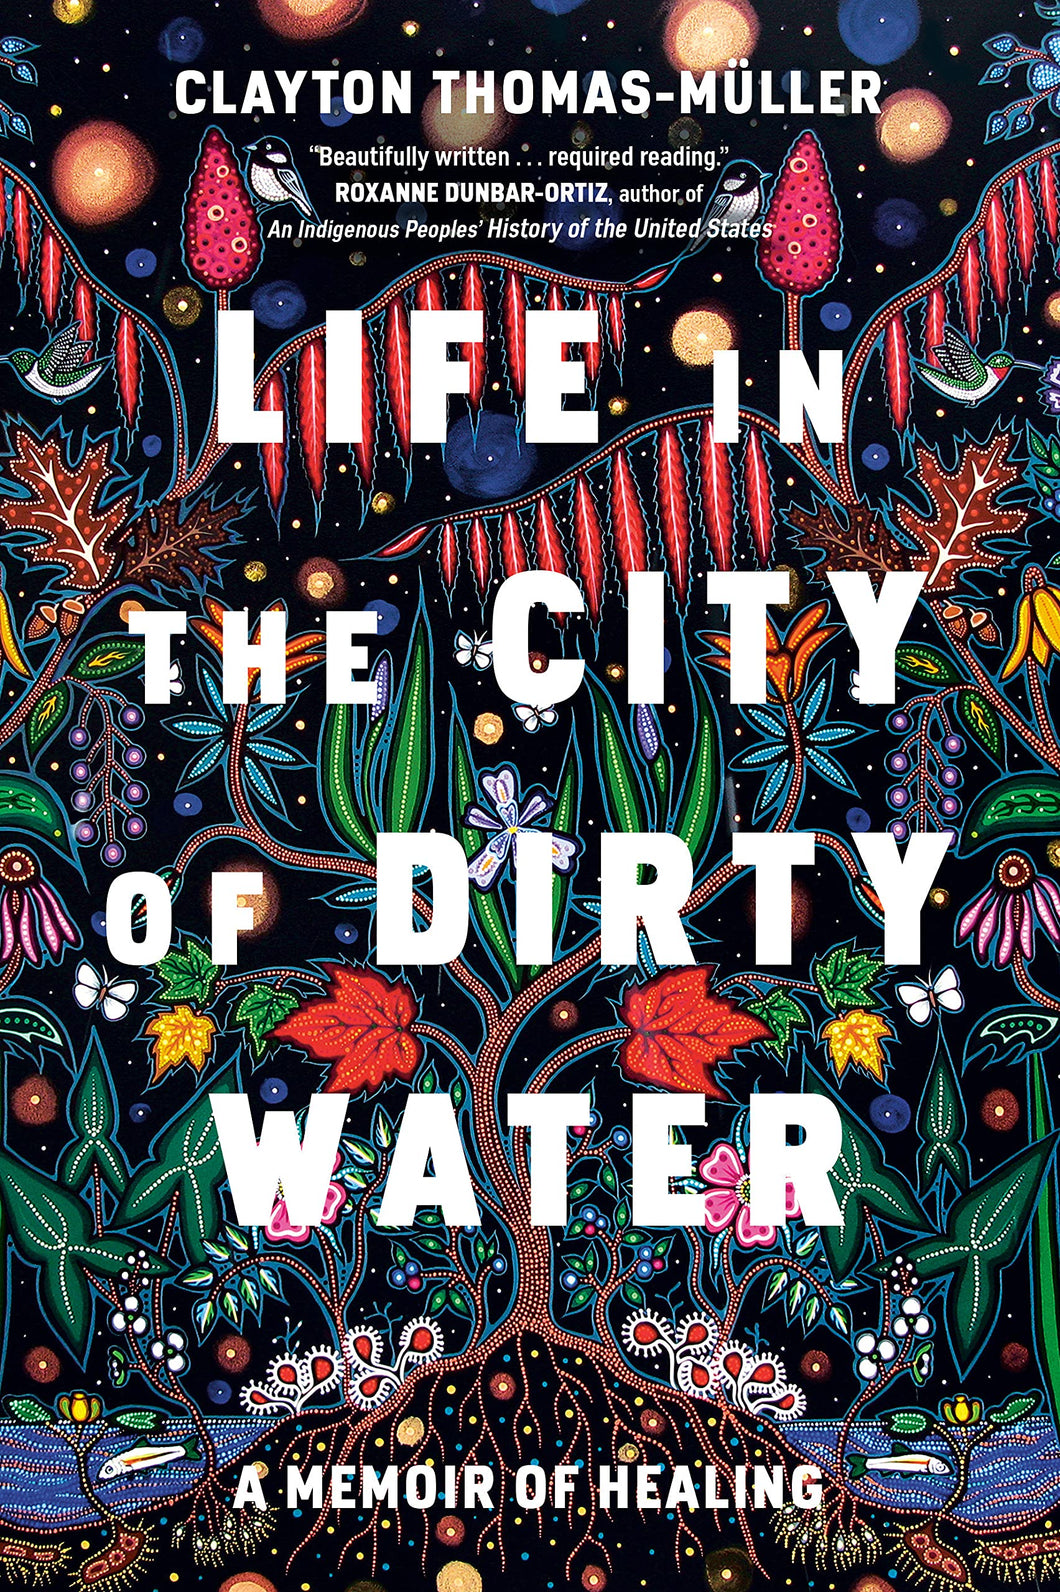 Life In The City Of Dirty Water: A Memoir Of Healing [Clayton Thomas-Muller]